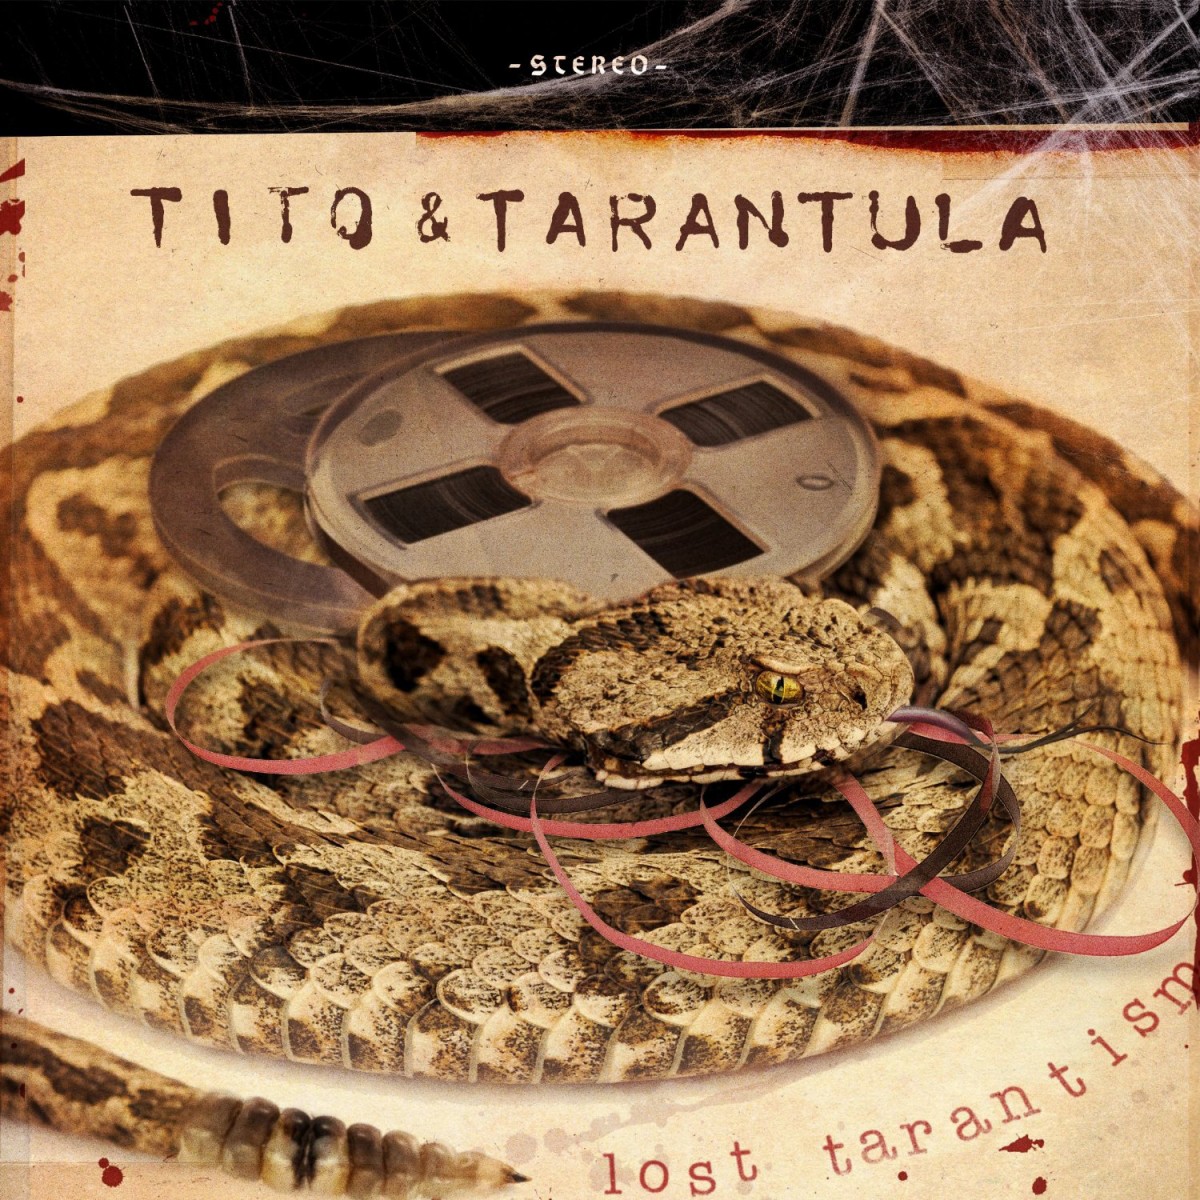 Tito & Tarantula: Lost Tarantism (2015)